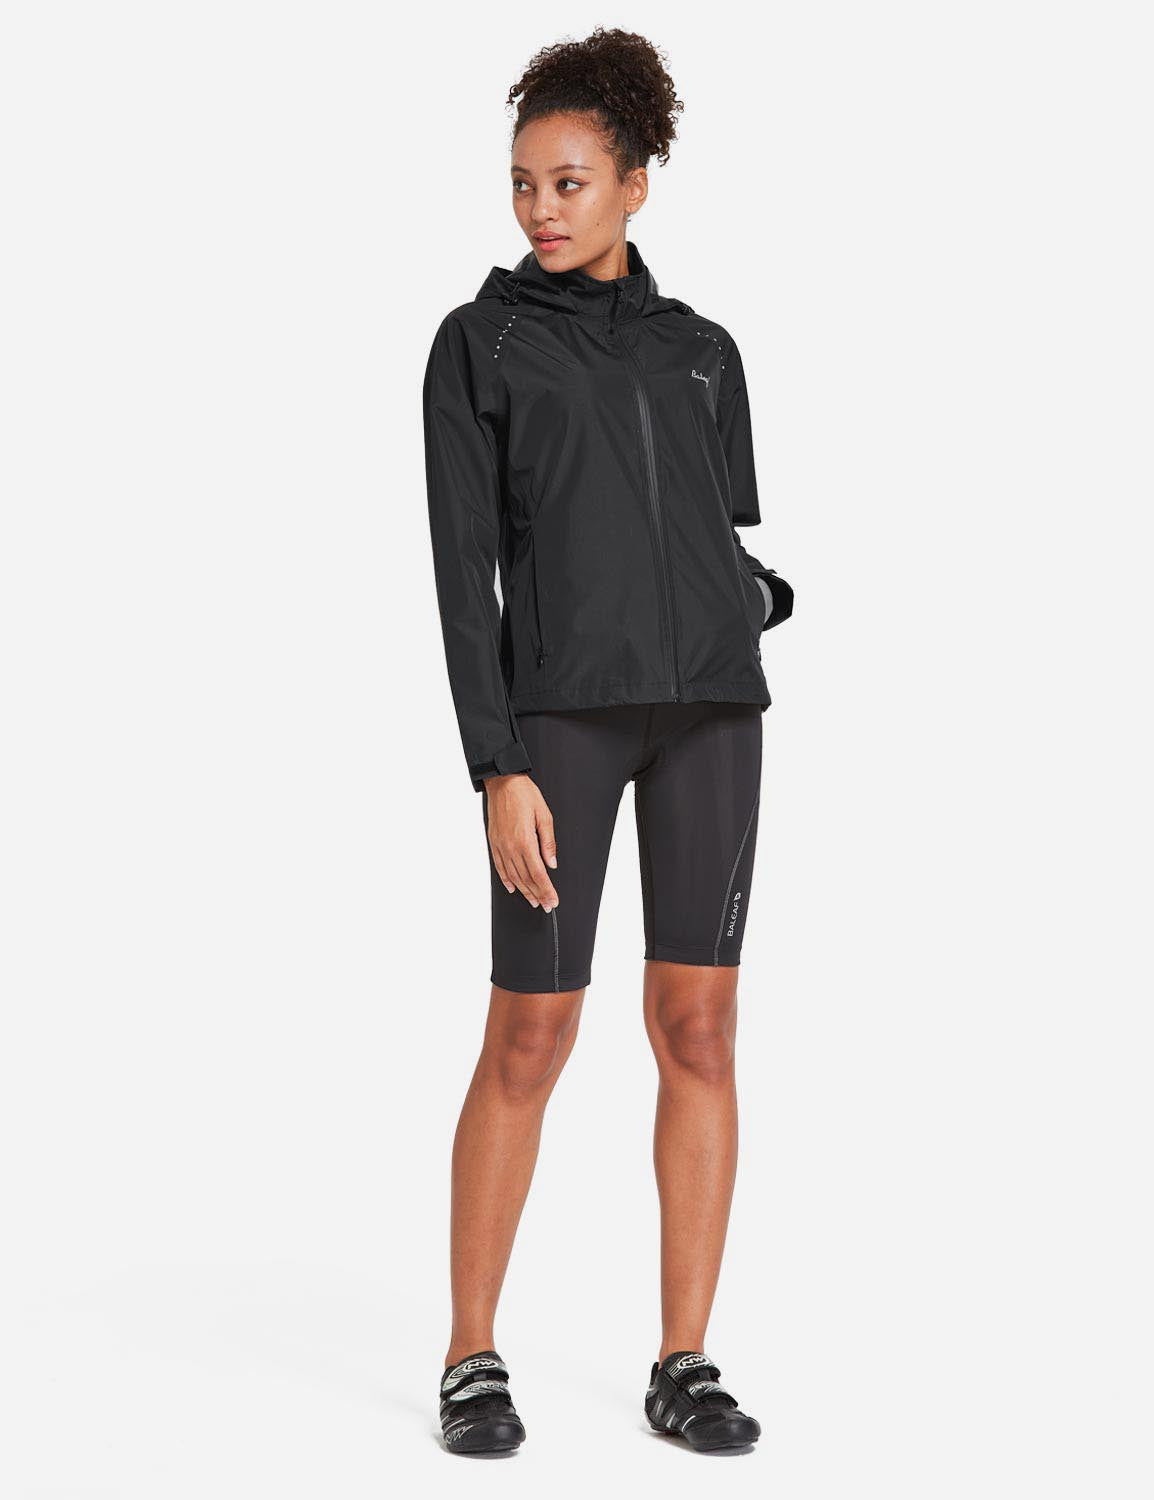 Baleaf Women's Waterproof Lightweight Full-Zip Pocketed Cycling Jacket aaa468 Black Full